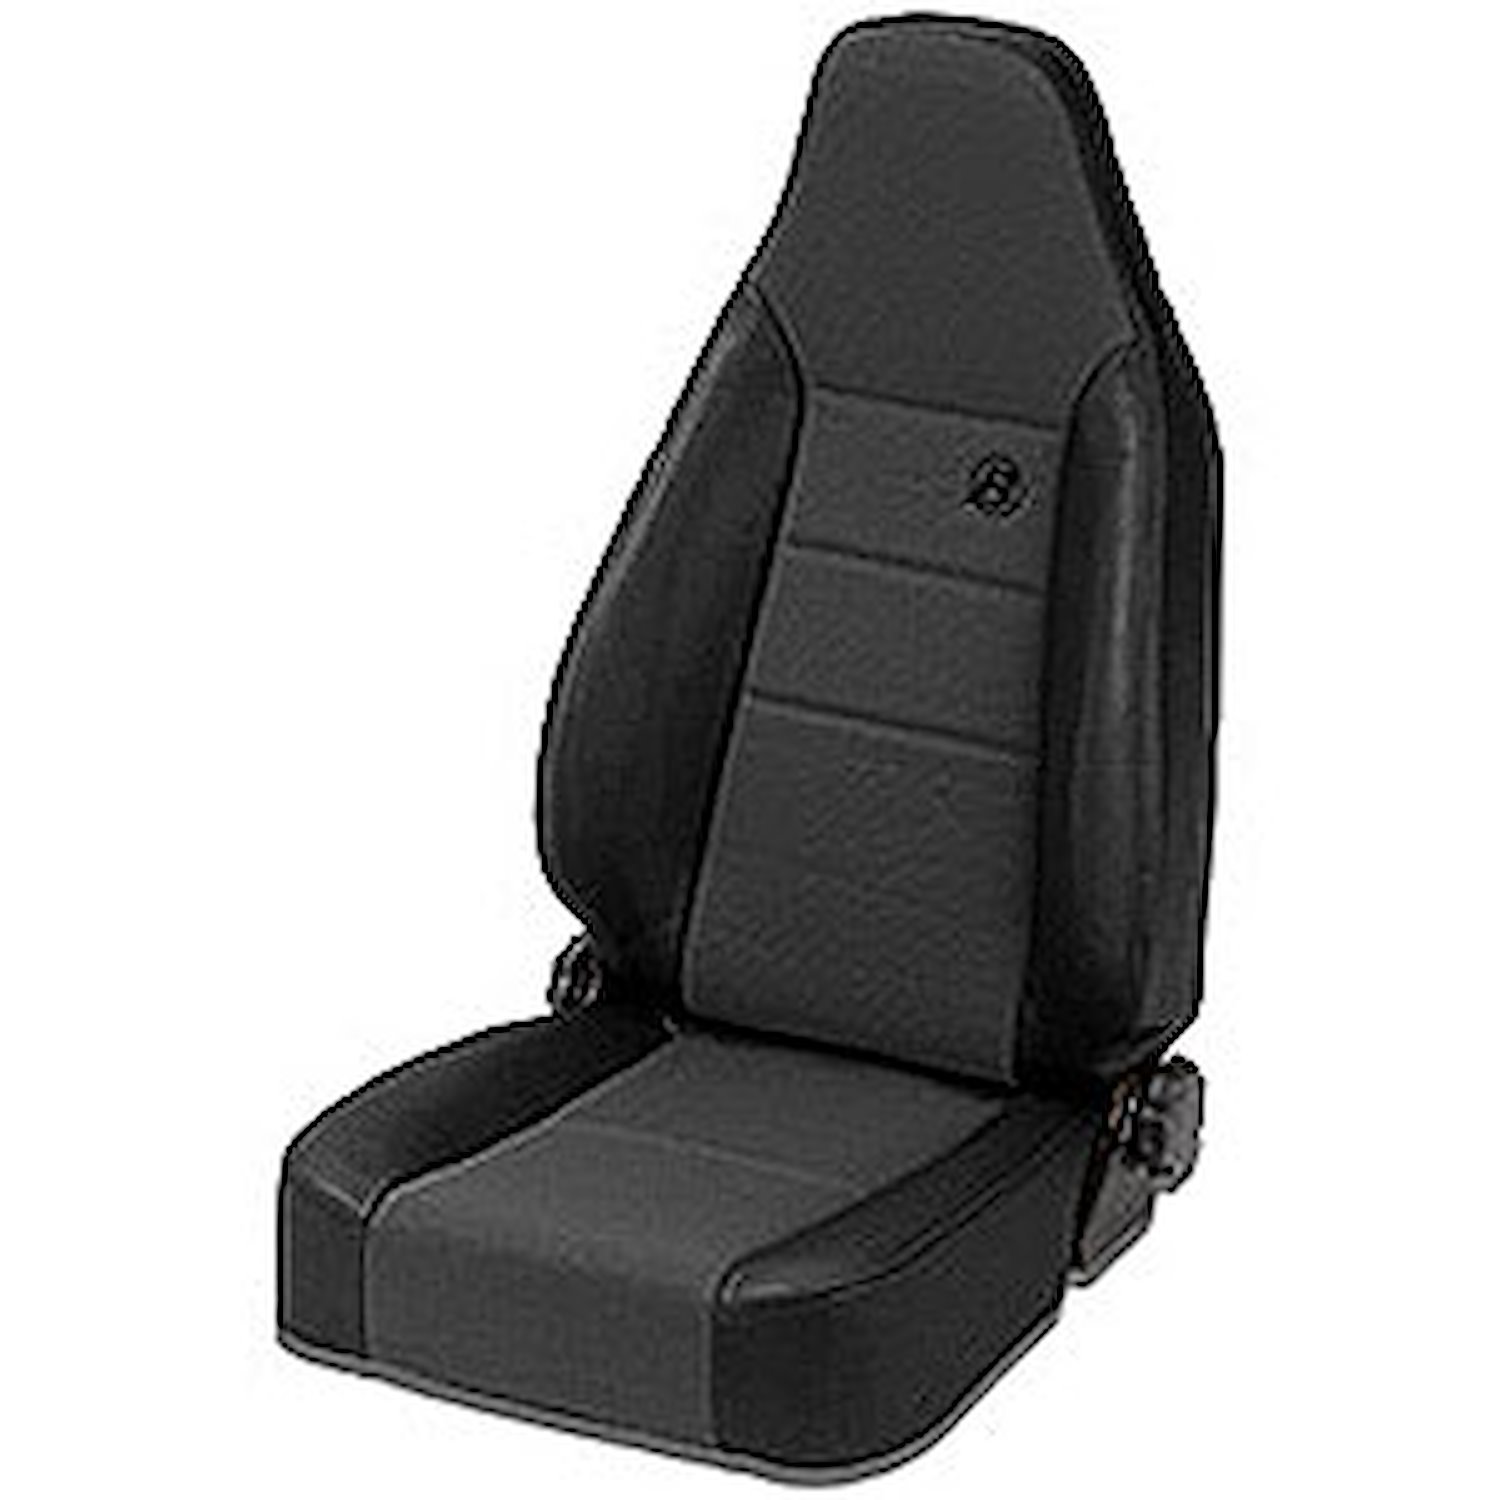 Trailmax II Sport Seat, Black Denim, Front, High-Back, Vinyl w/Center Fabric Insert, Bucket, Driver Or Pass Side